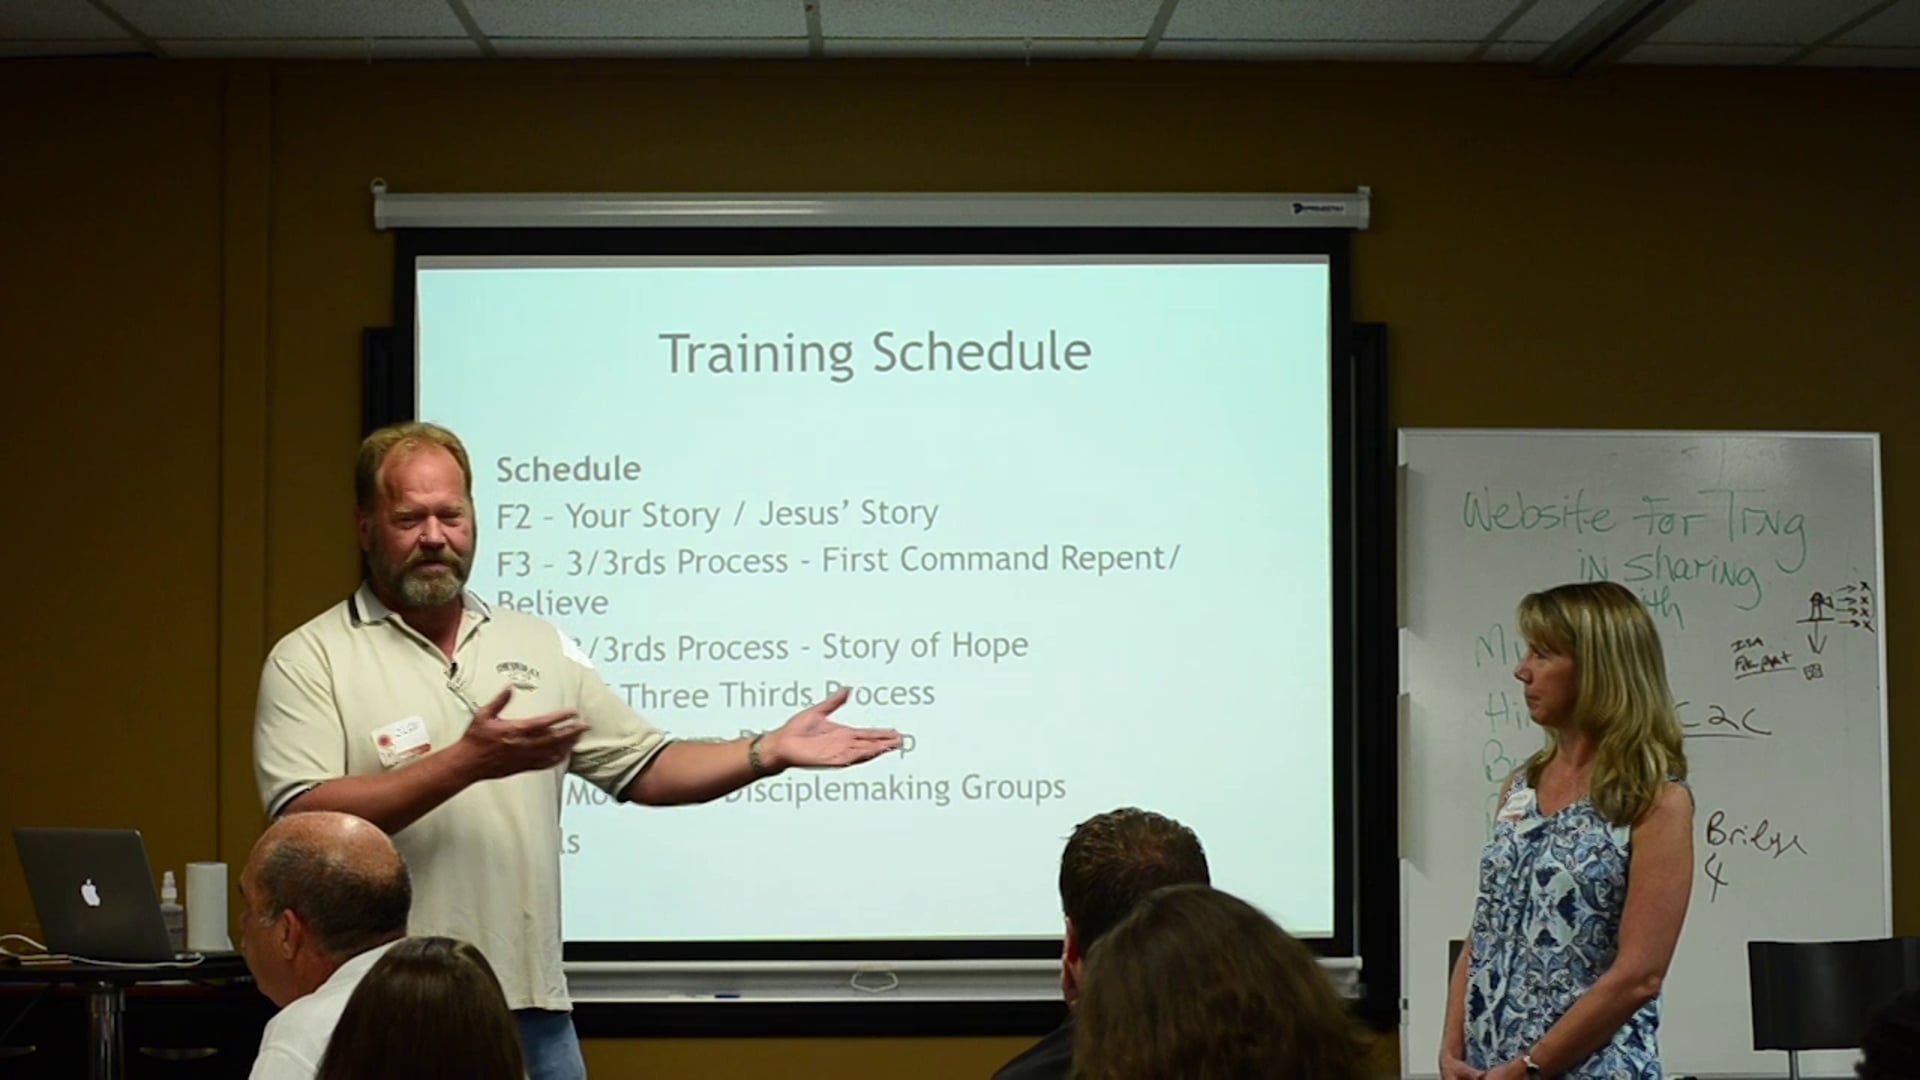 Jeff Sundell Evangelism Discipleship Training Atlanta Oct. 10-11 2014 Part Two